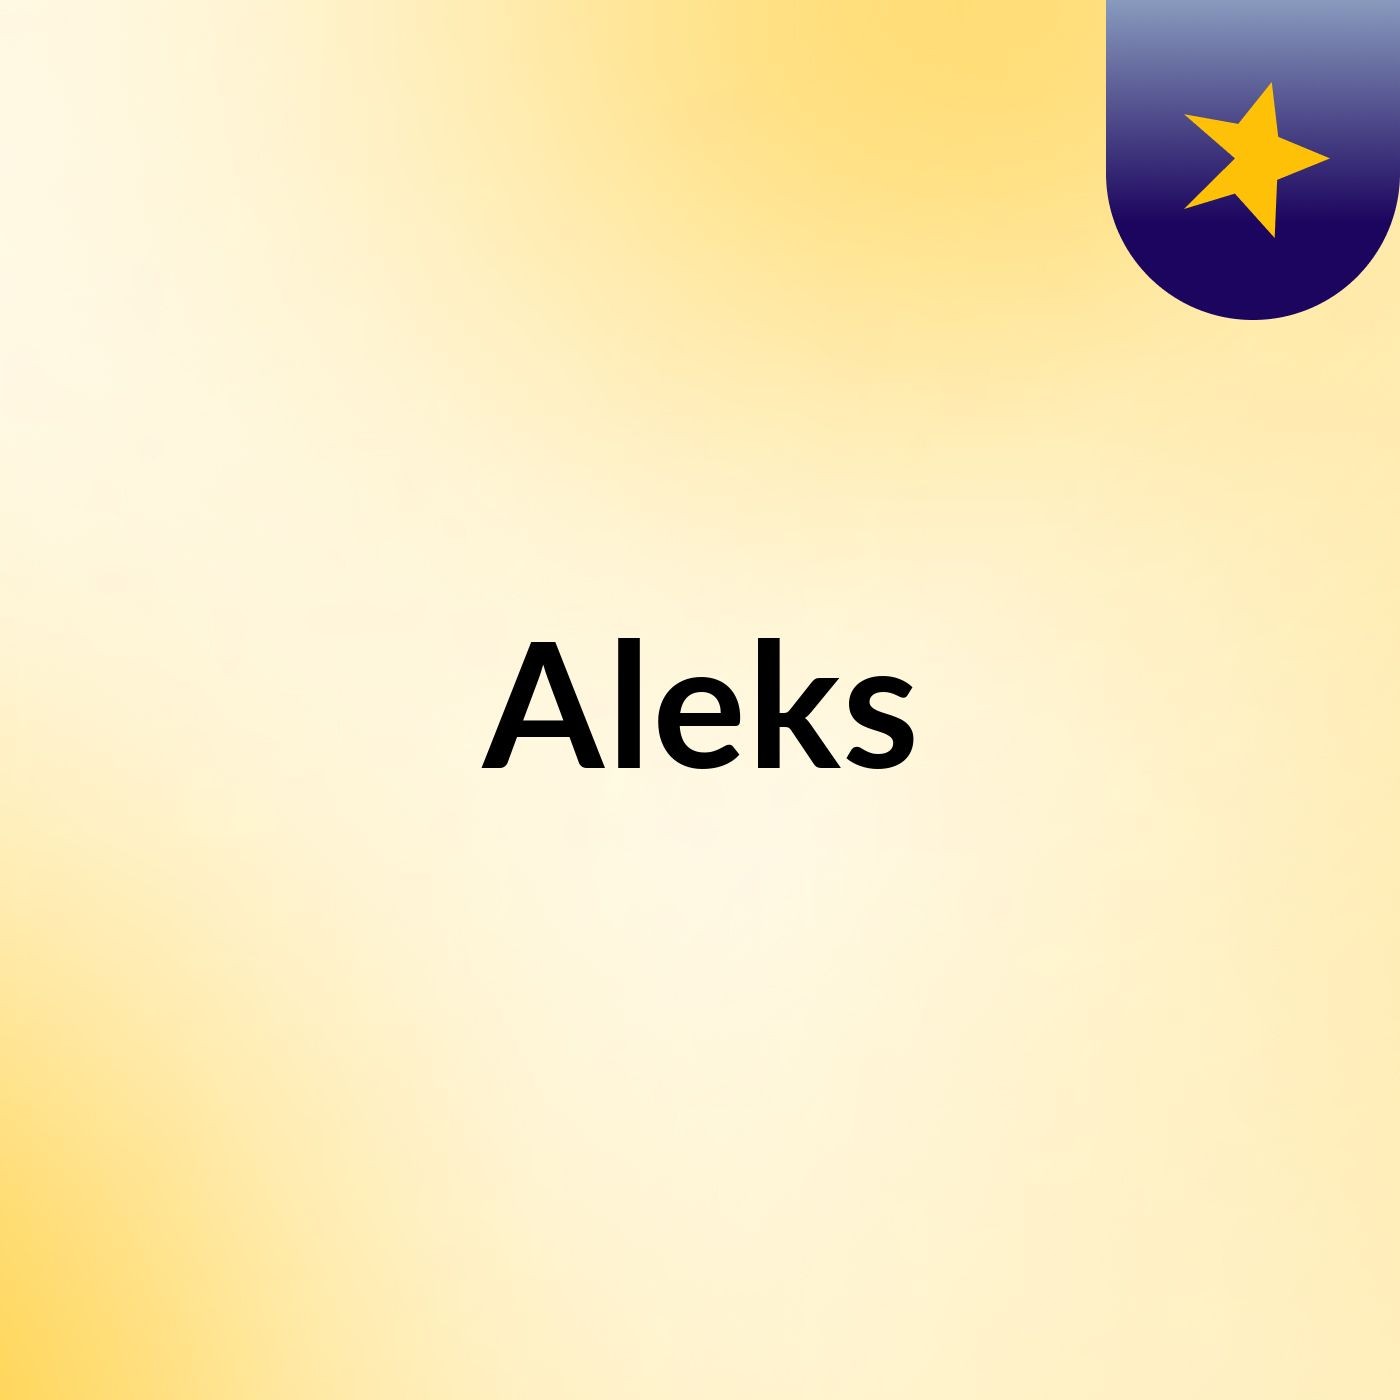 Aleks